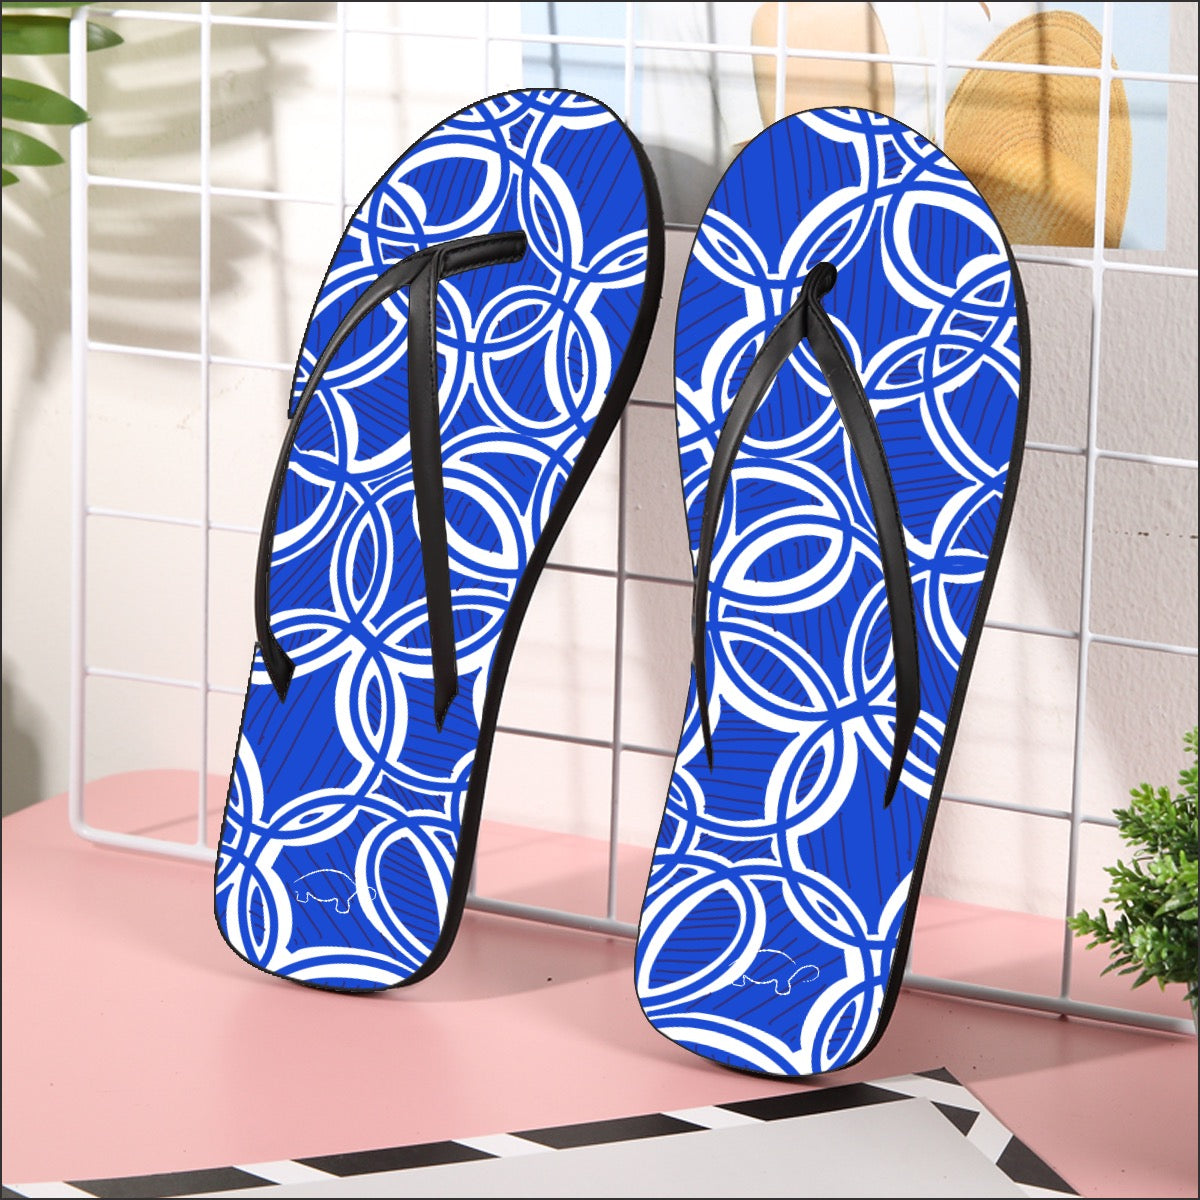 Geometric Blue/white Flip Flops. Footwear. Beach wear. Design hand-painted by the Designer Maria Alejandra Echenique